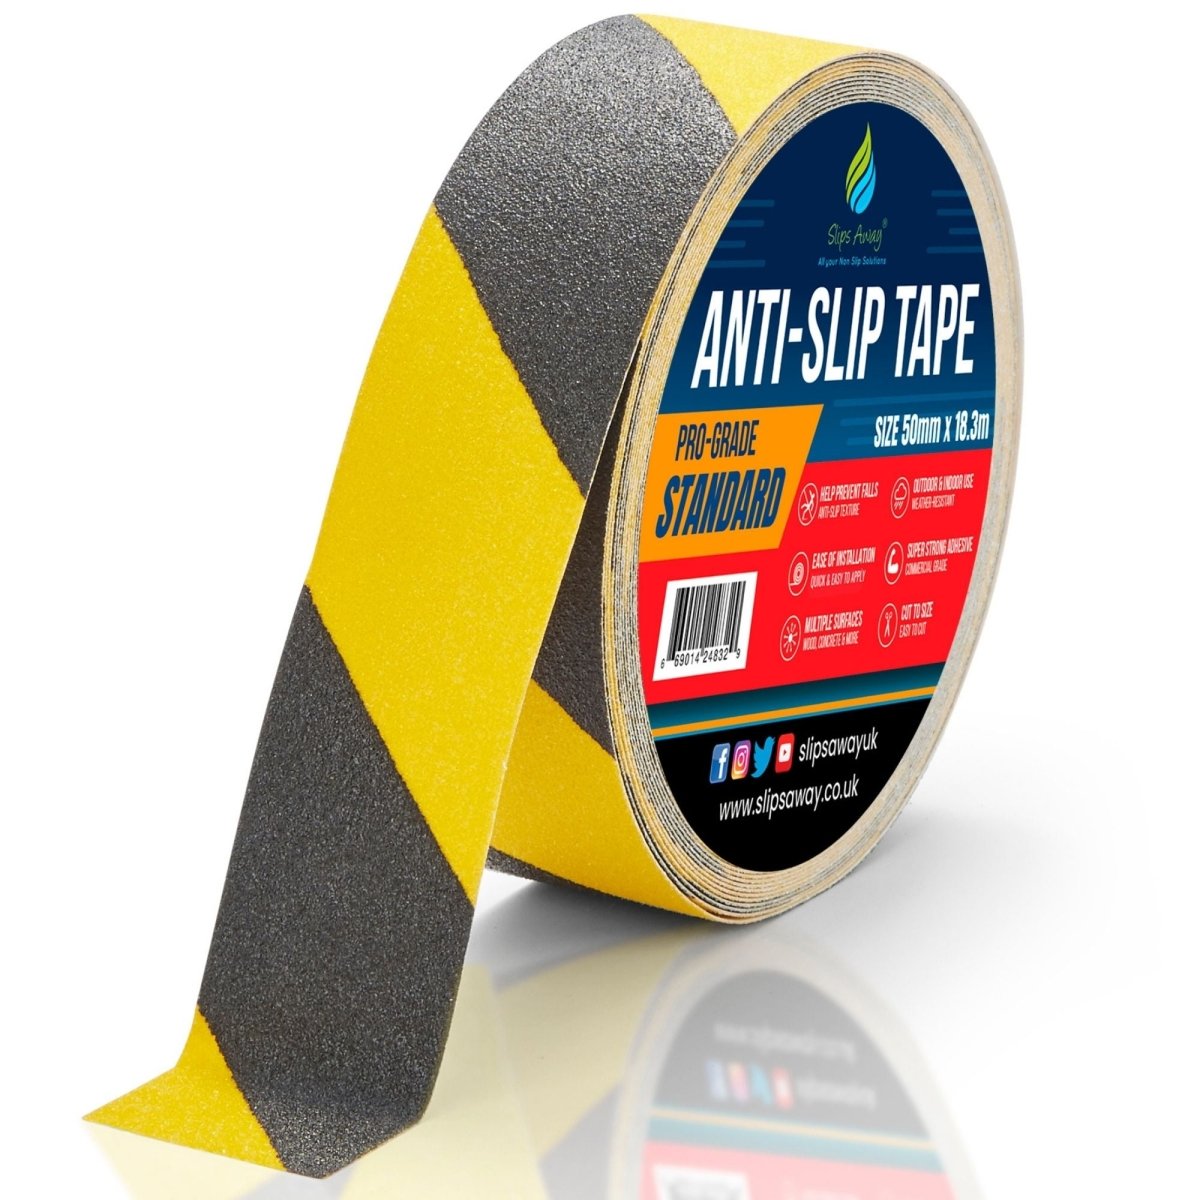 Hazard Yellow Black Anti Slip Tape Rolls Standard Grade - Slips Away - Non slip tape - 50mm x 18.3m